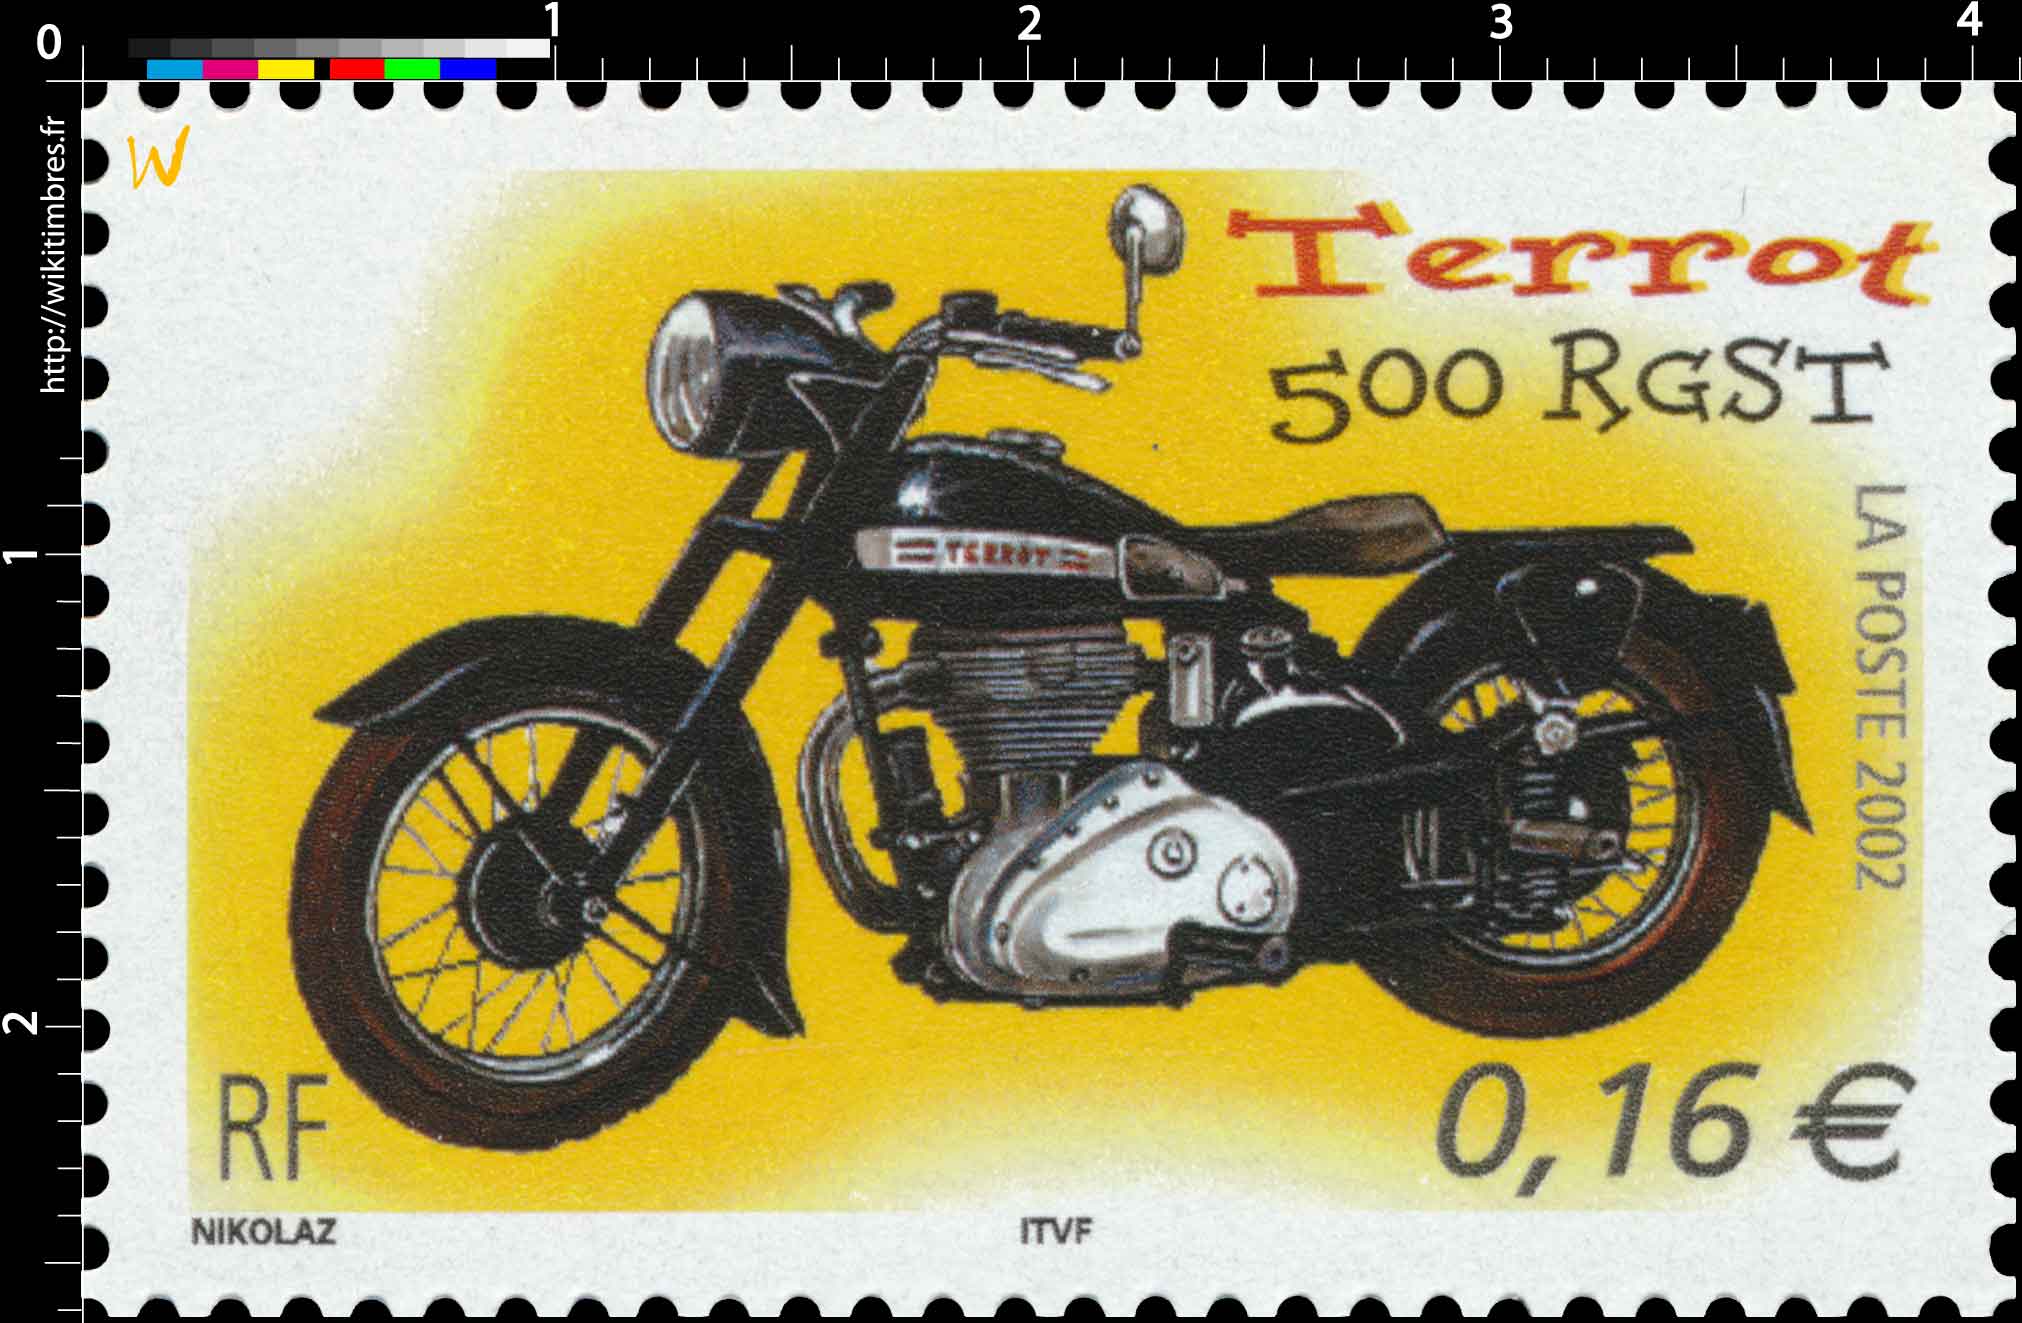 2002 Terrot 500 RGST